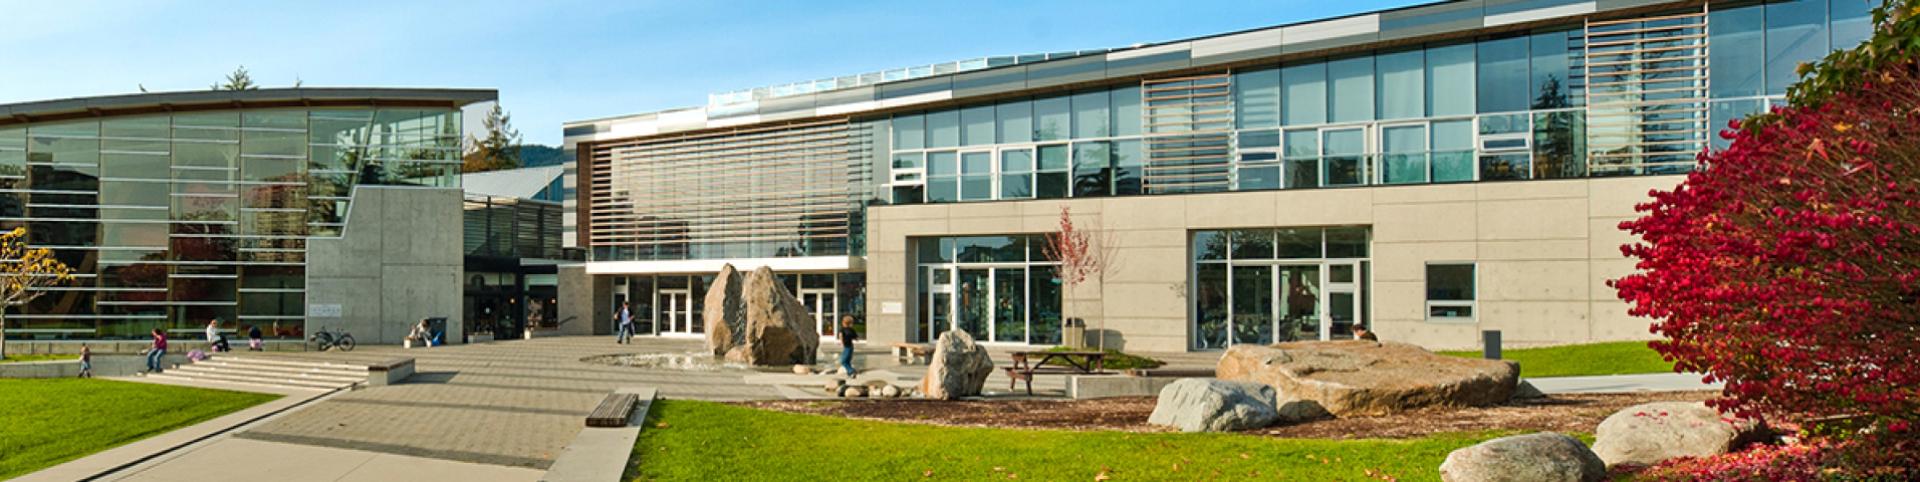 West Vancouver Community Centre and Aquatic Centre